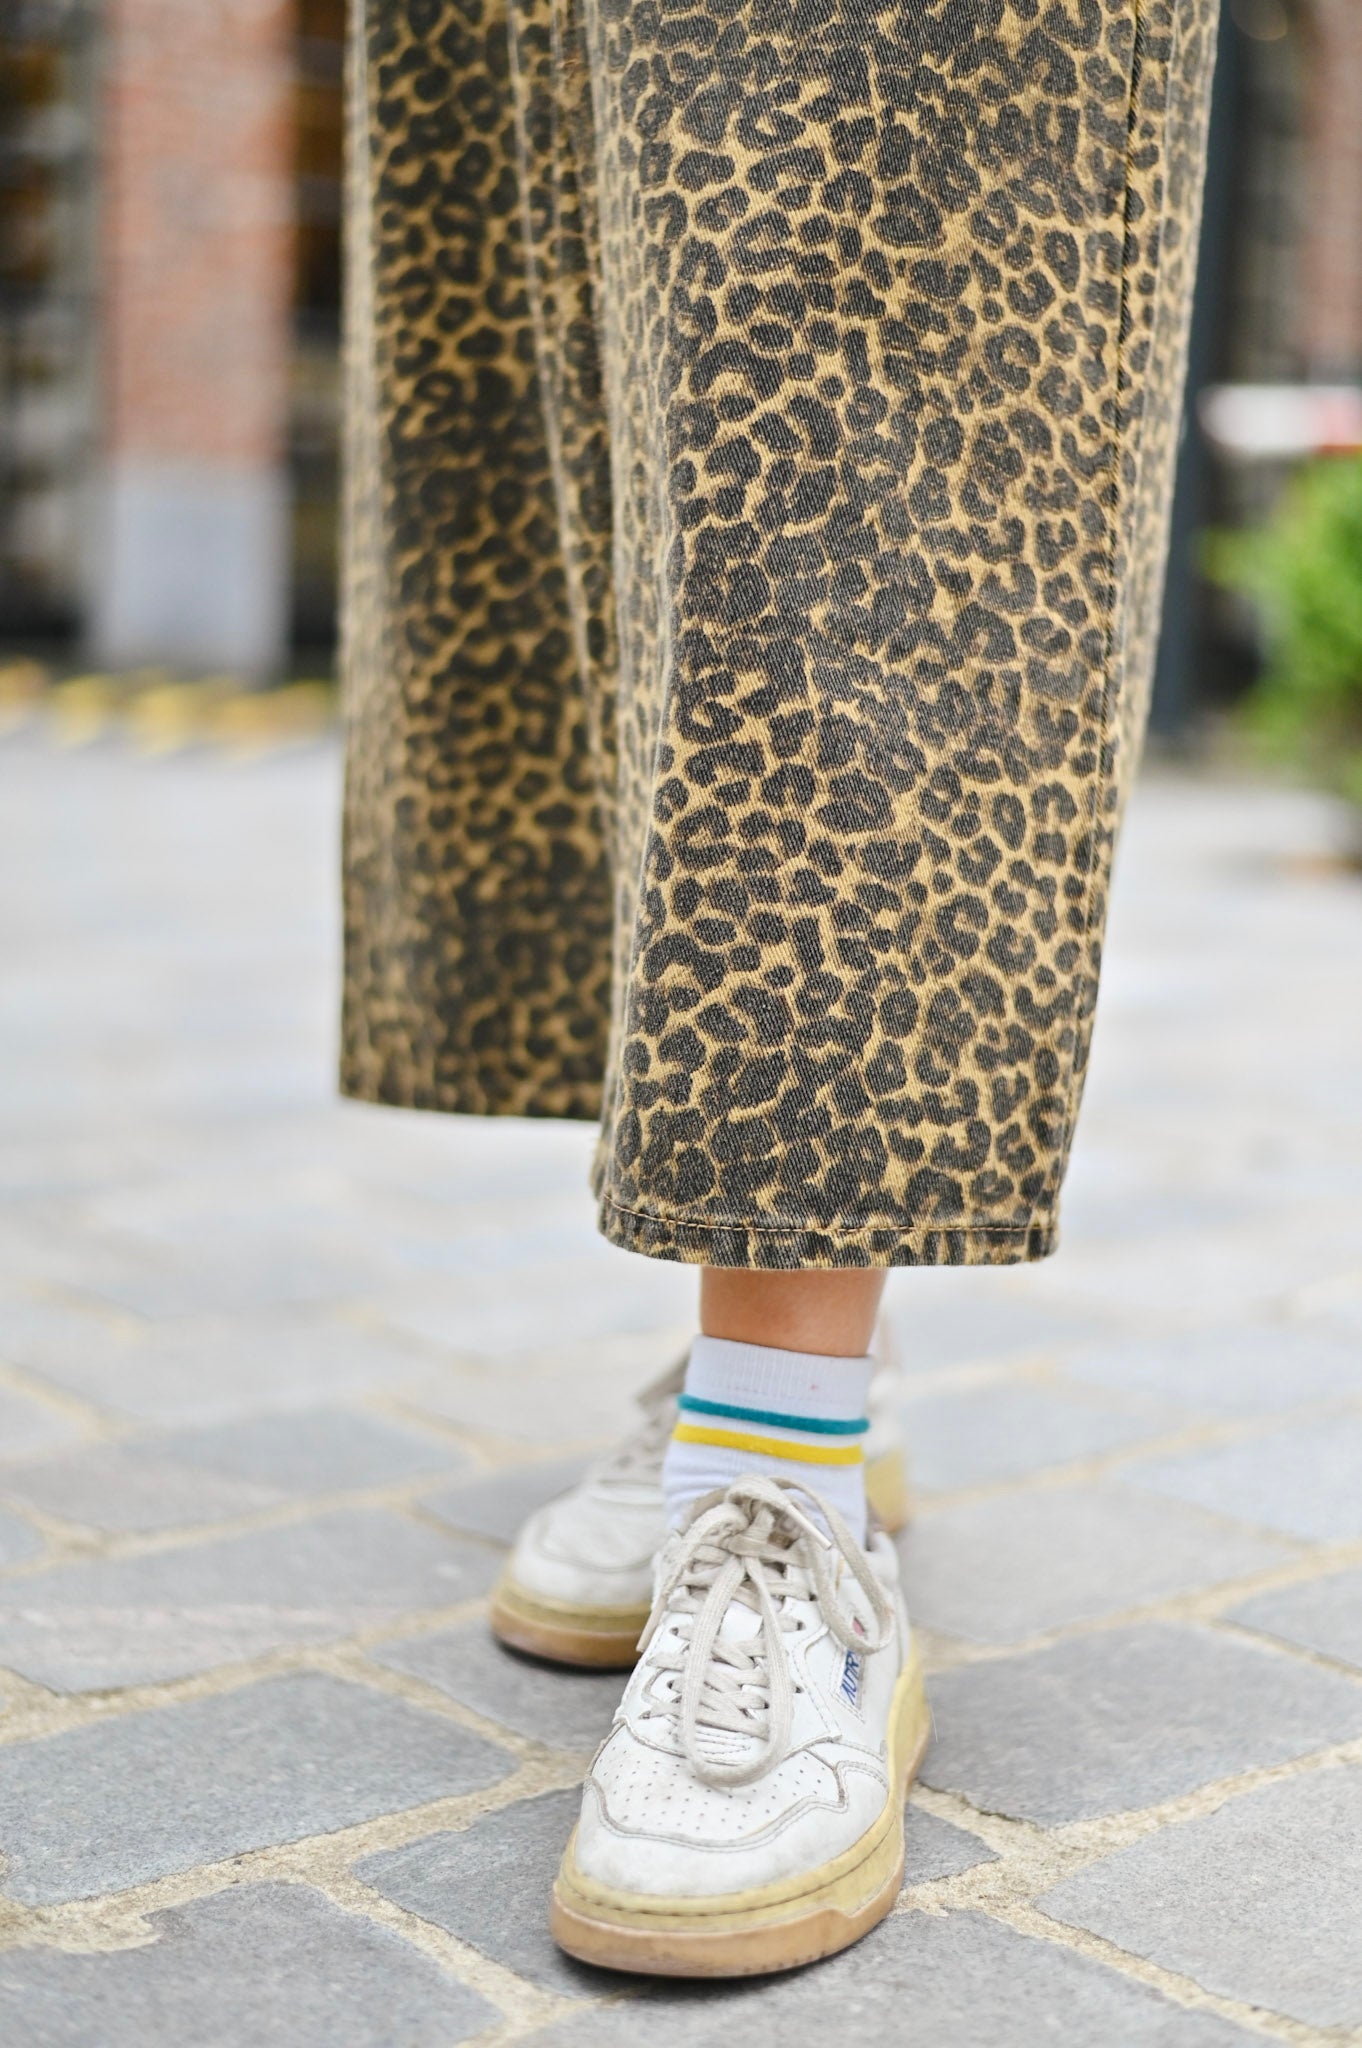 Leopard skirt